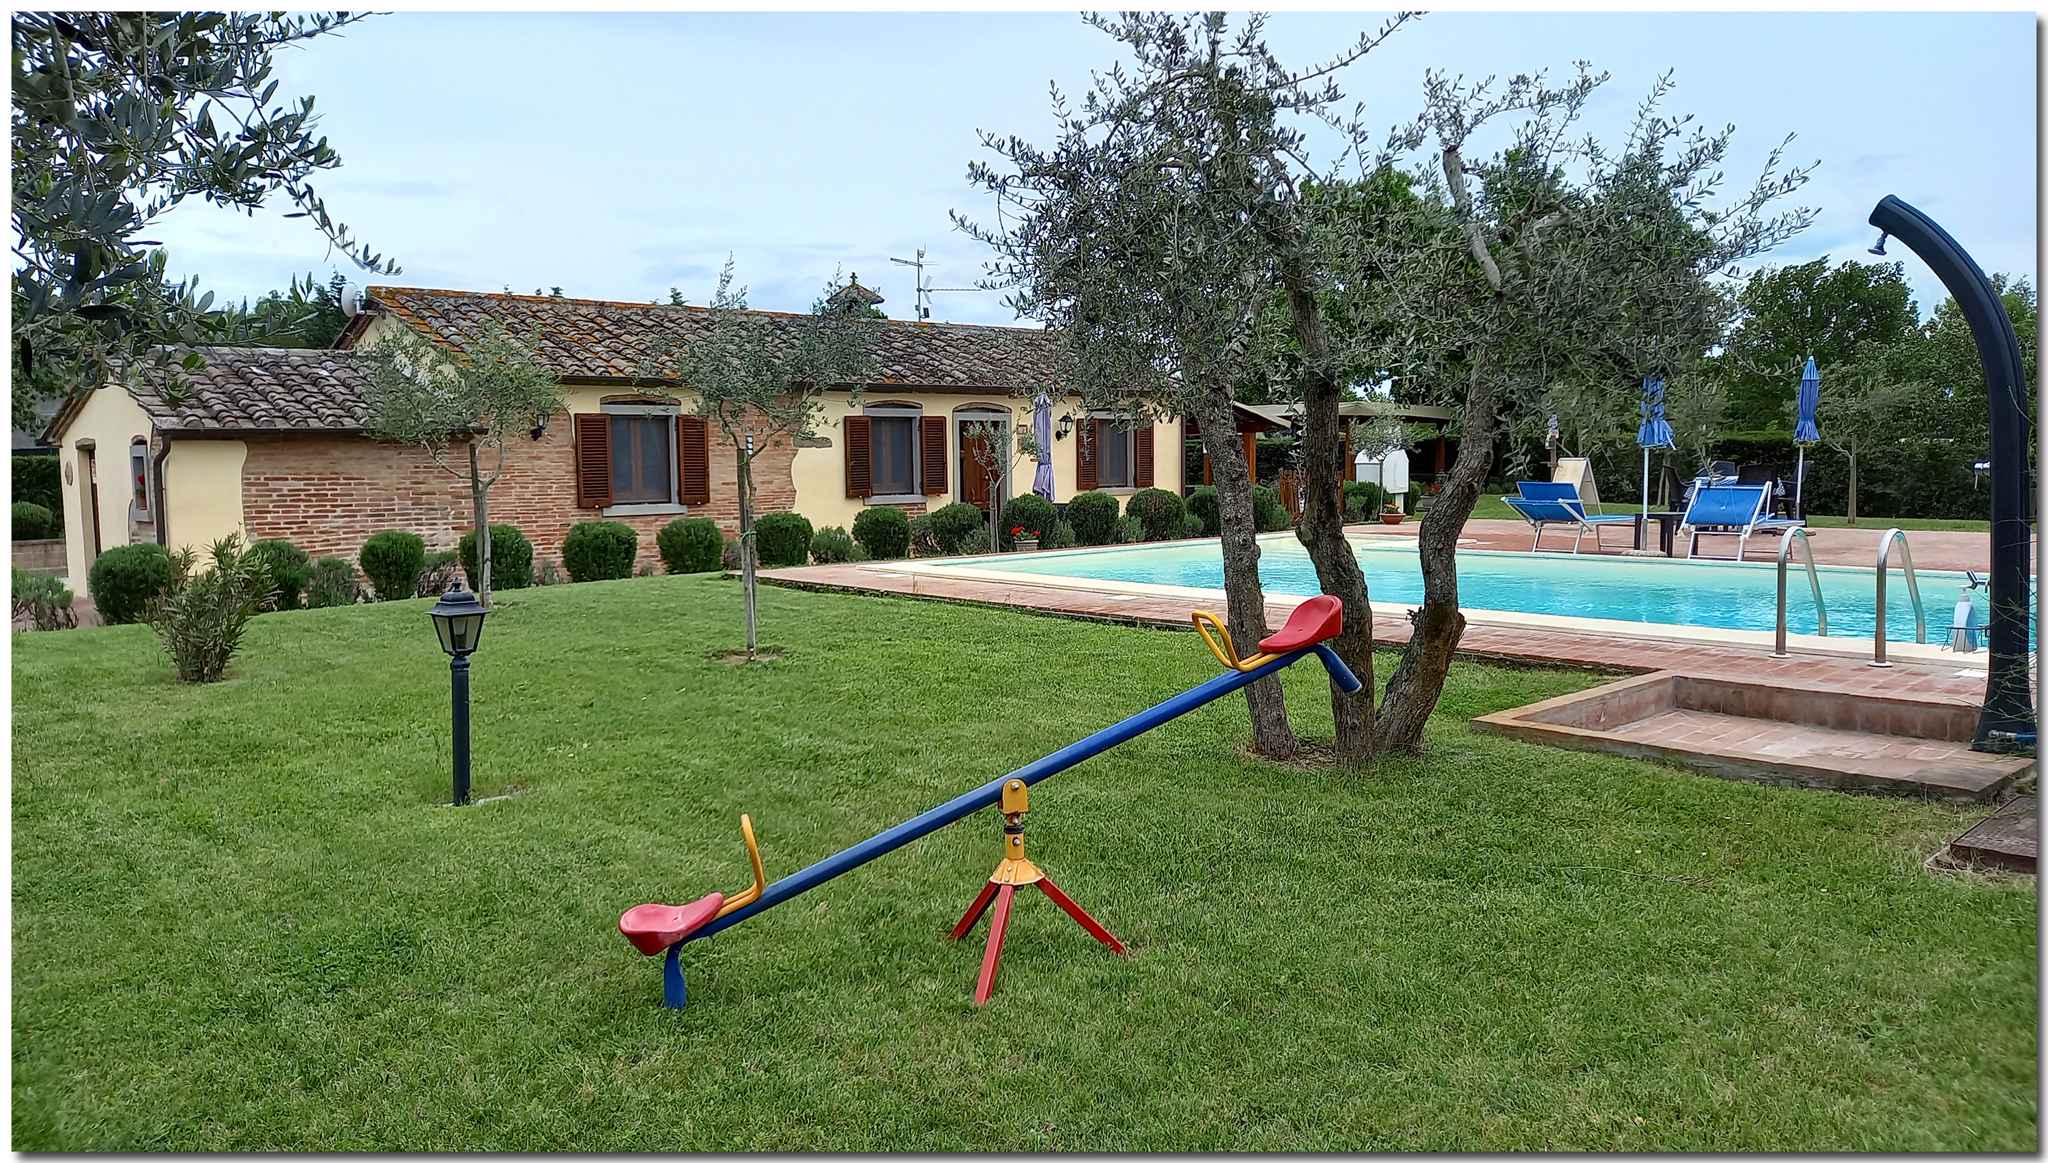 Villa mit Swimmingpool, WLAN und Klimaanlage im He Ferienhaus  Cortona Trasimeno